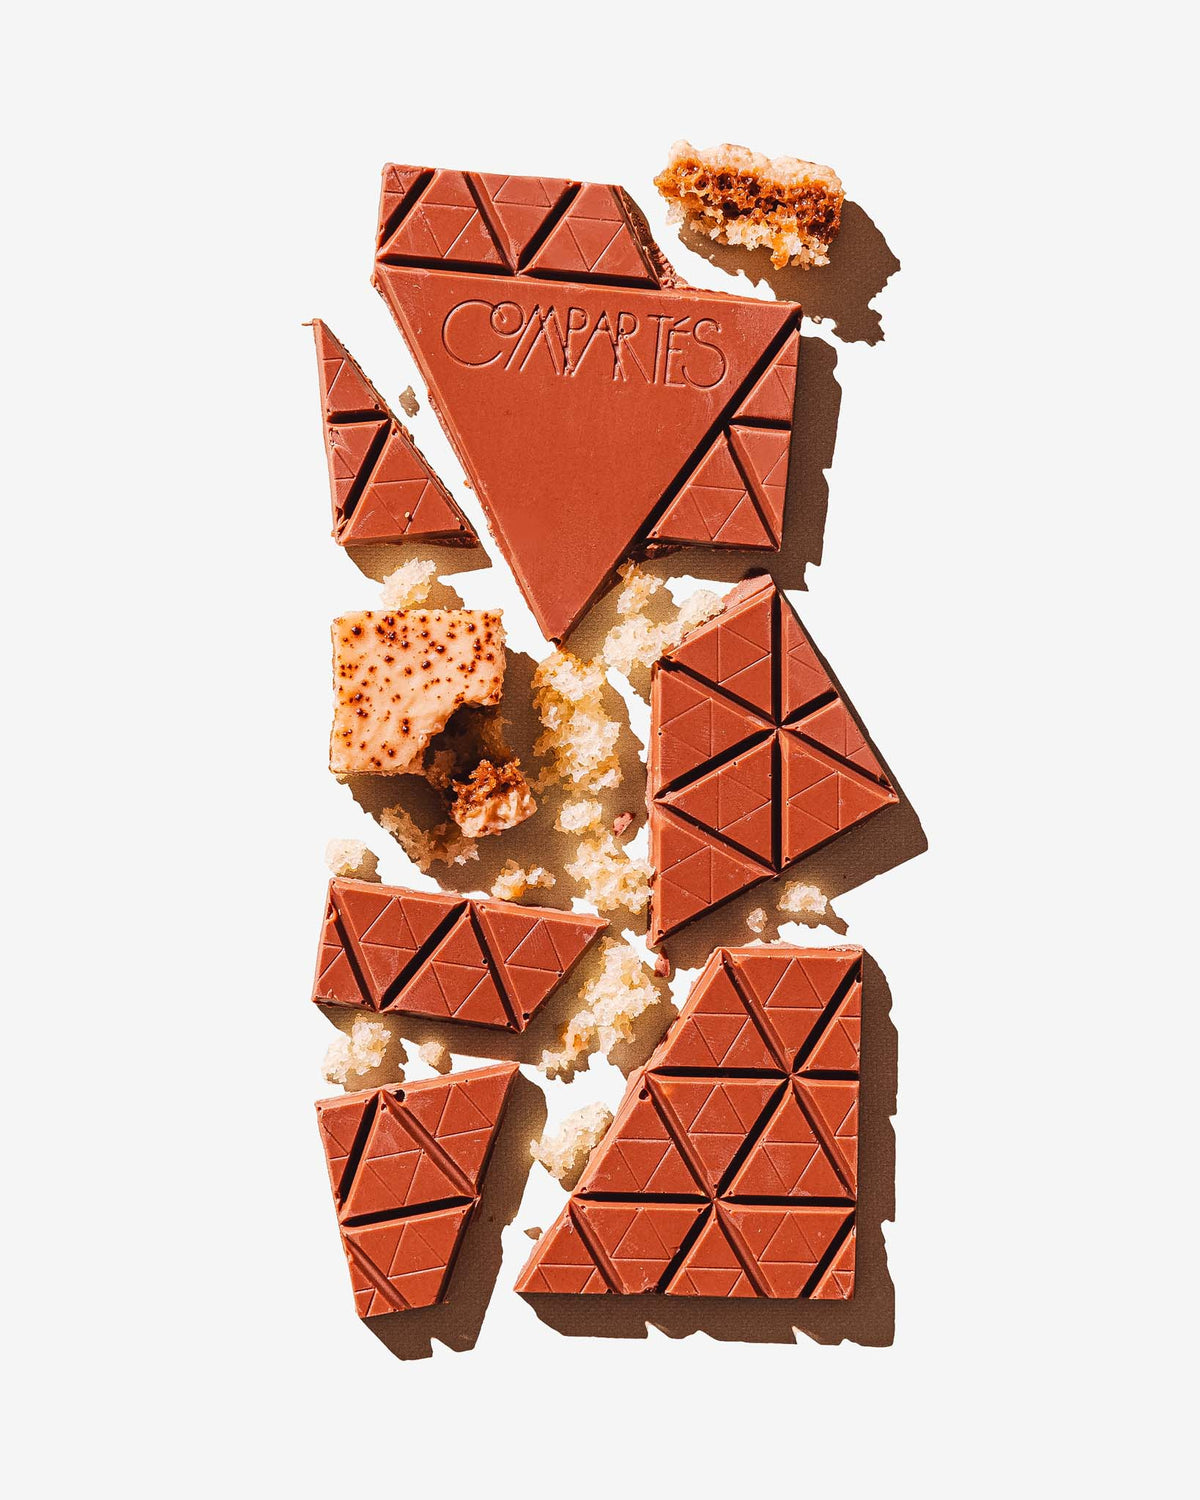 Luxury Chocolate Gifts - Tiramisu Gourmet Milk Chocolate Bars - Los Angeles Chocolates by Compartes